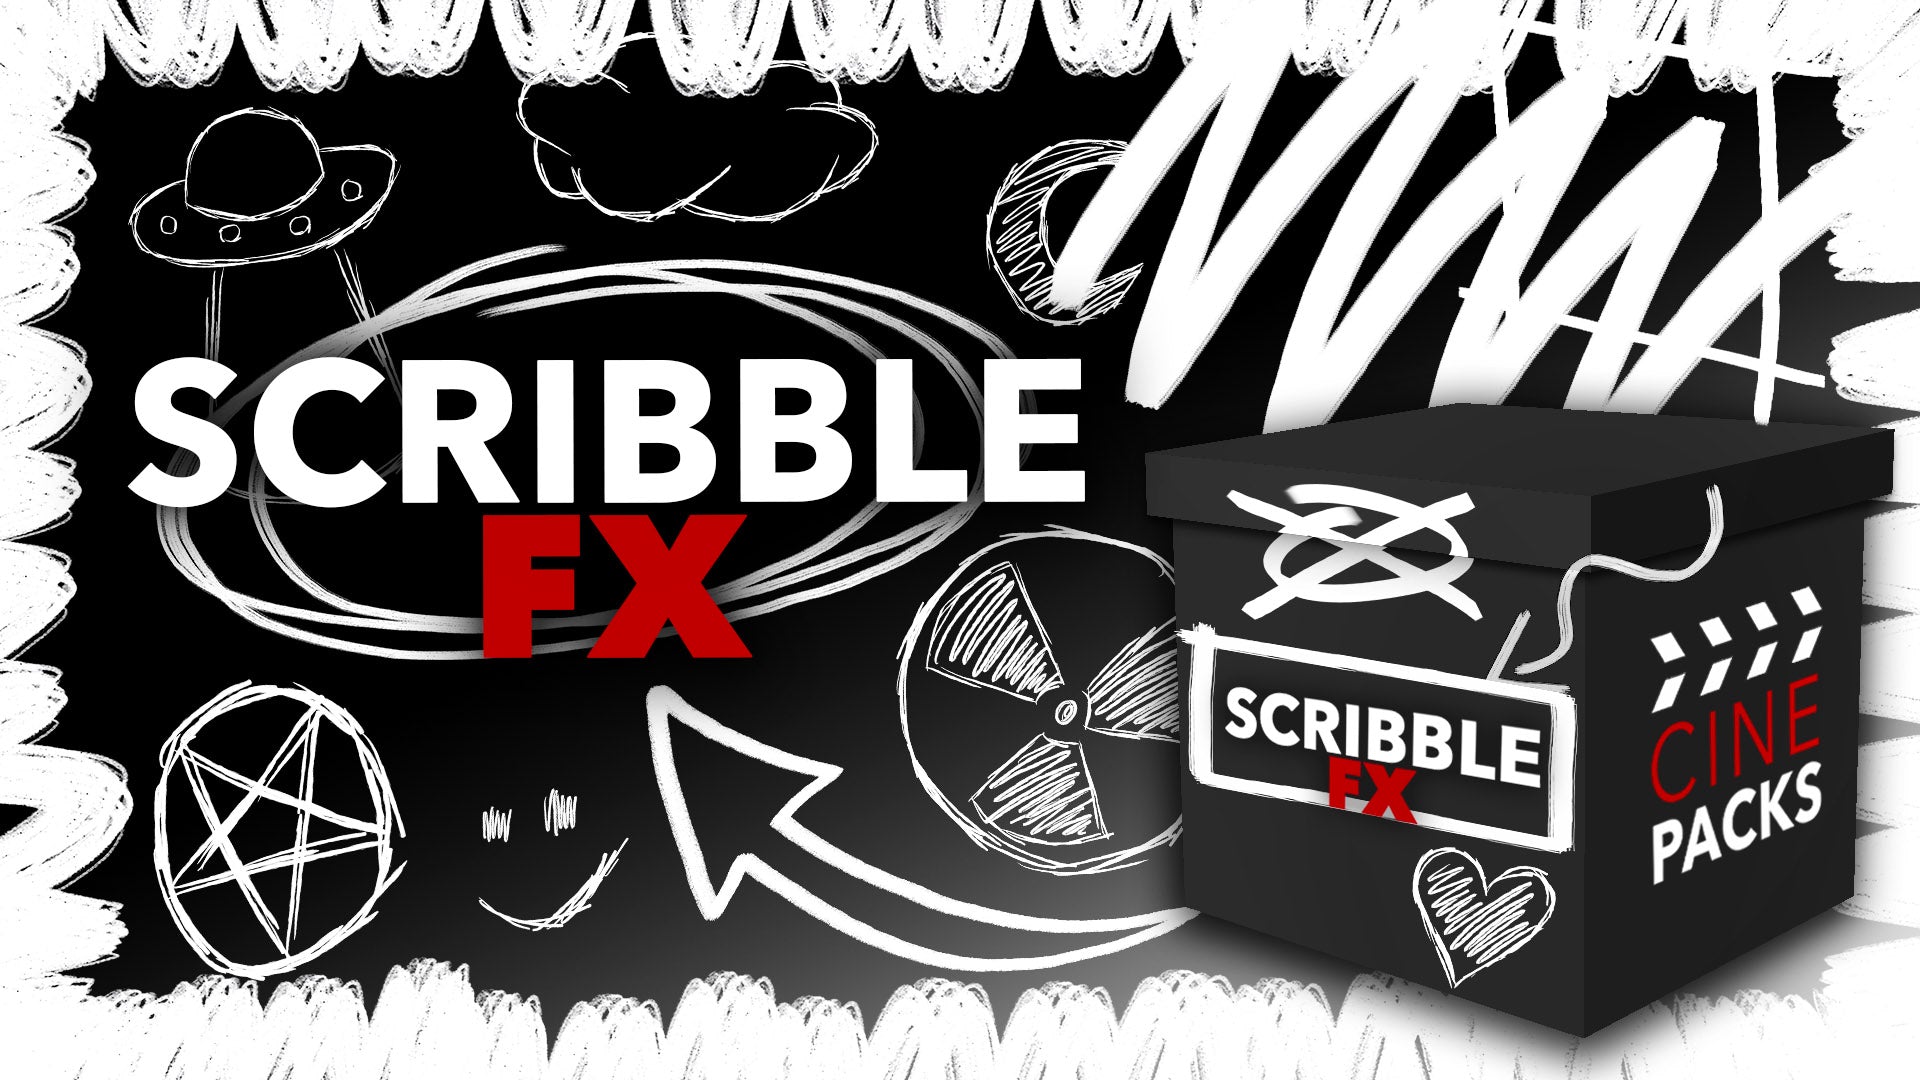 Scribble FX - CinePacks